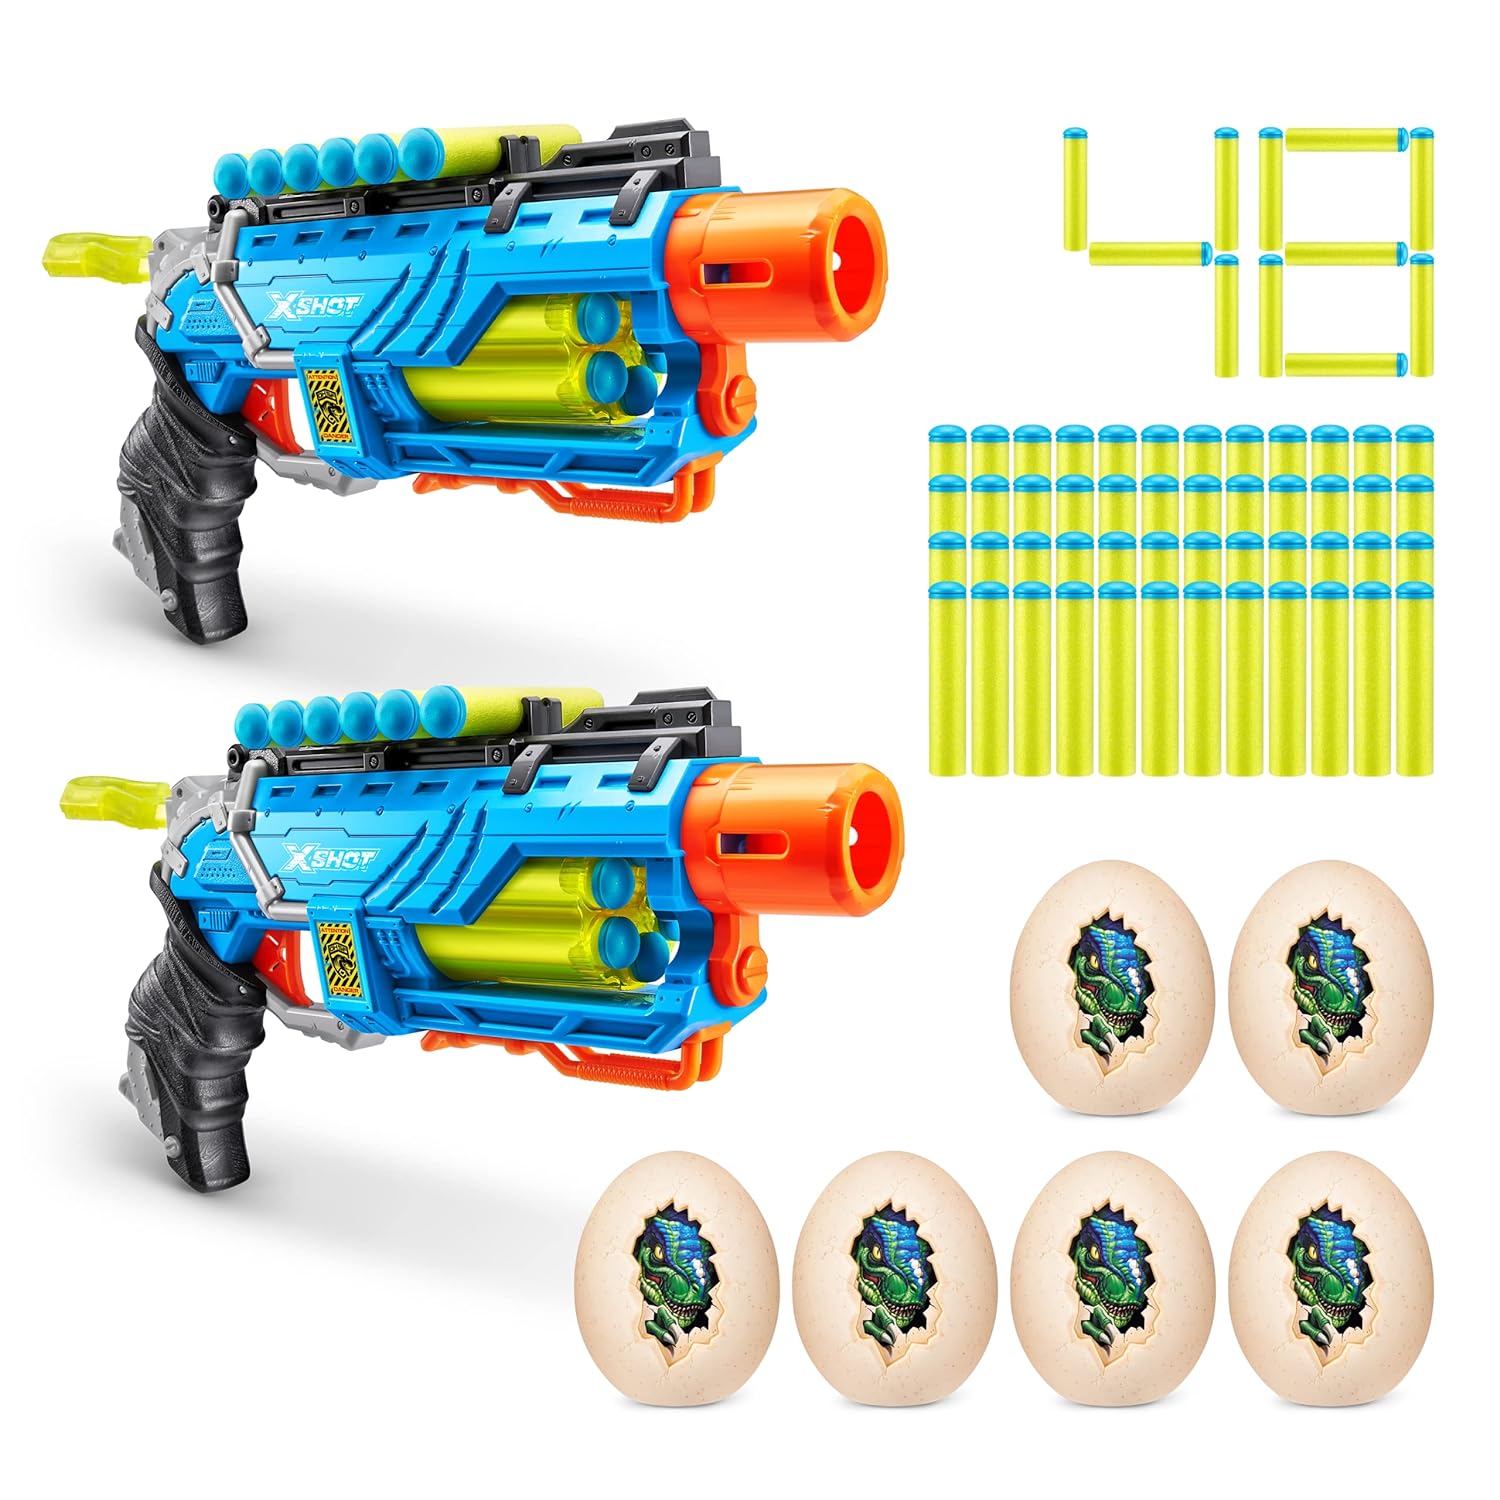 Dino Attack Dino Striker (2 Pack + 48 Darts + 6 Shooting Targets) by ZURU, X-Shot Blue Foam Dart Blaster, Toy Blaster, Automatic Rotating Barrel, Slam Fire, Toys for Boys, Kids, Teens (Blue)